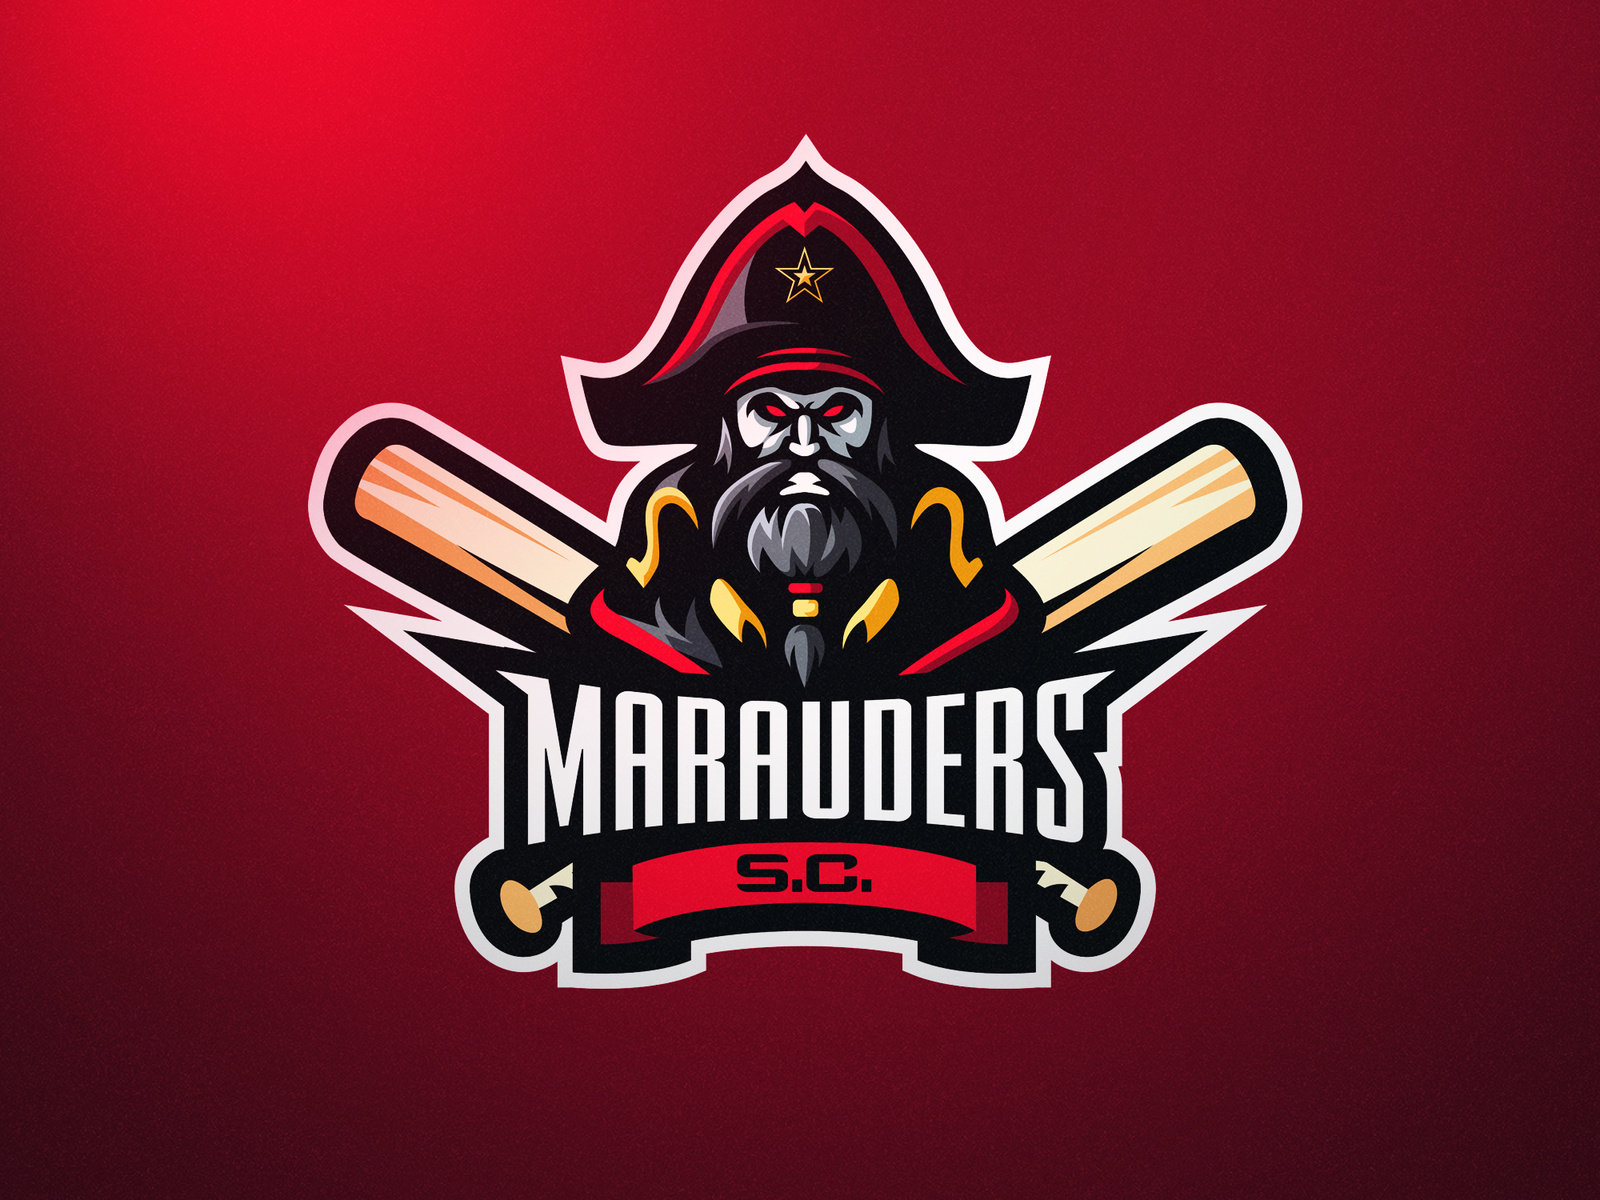 Marauders Baseball Team Logo Design.